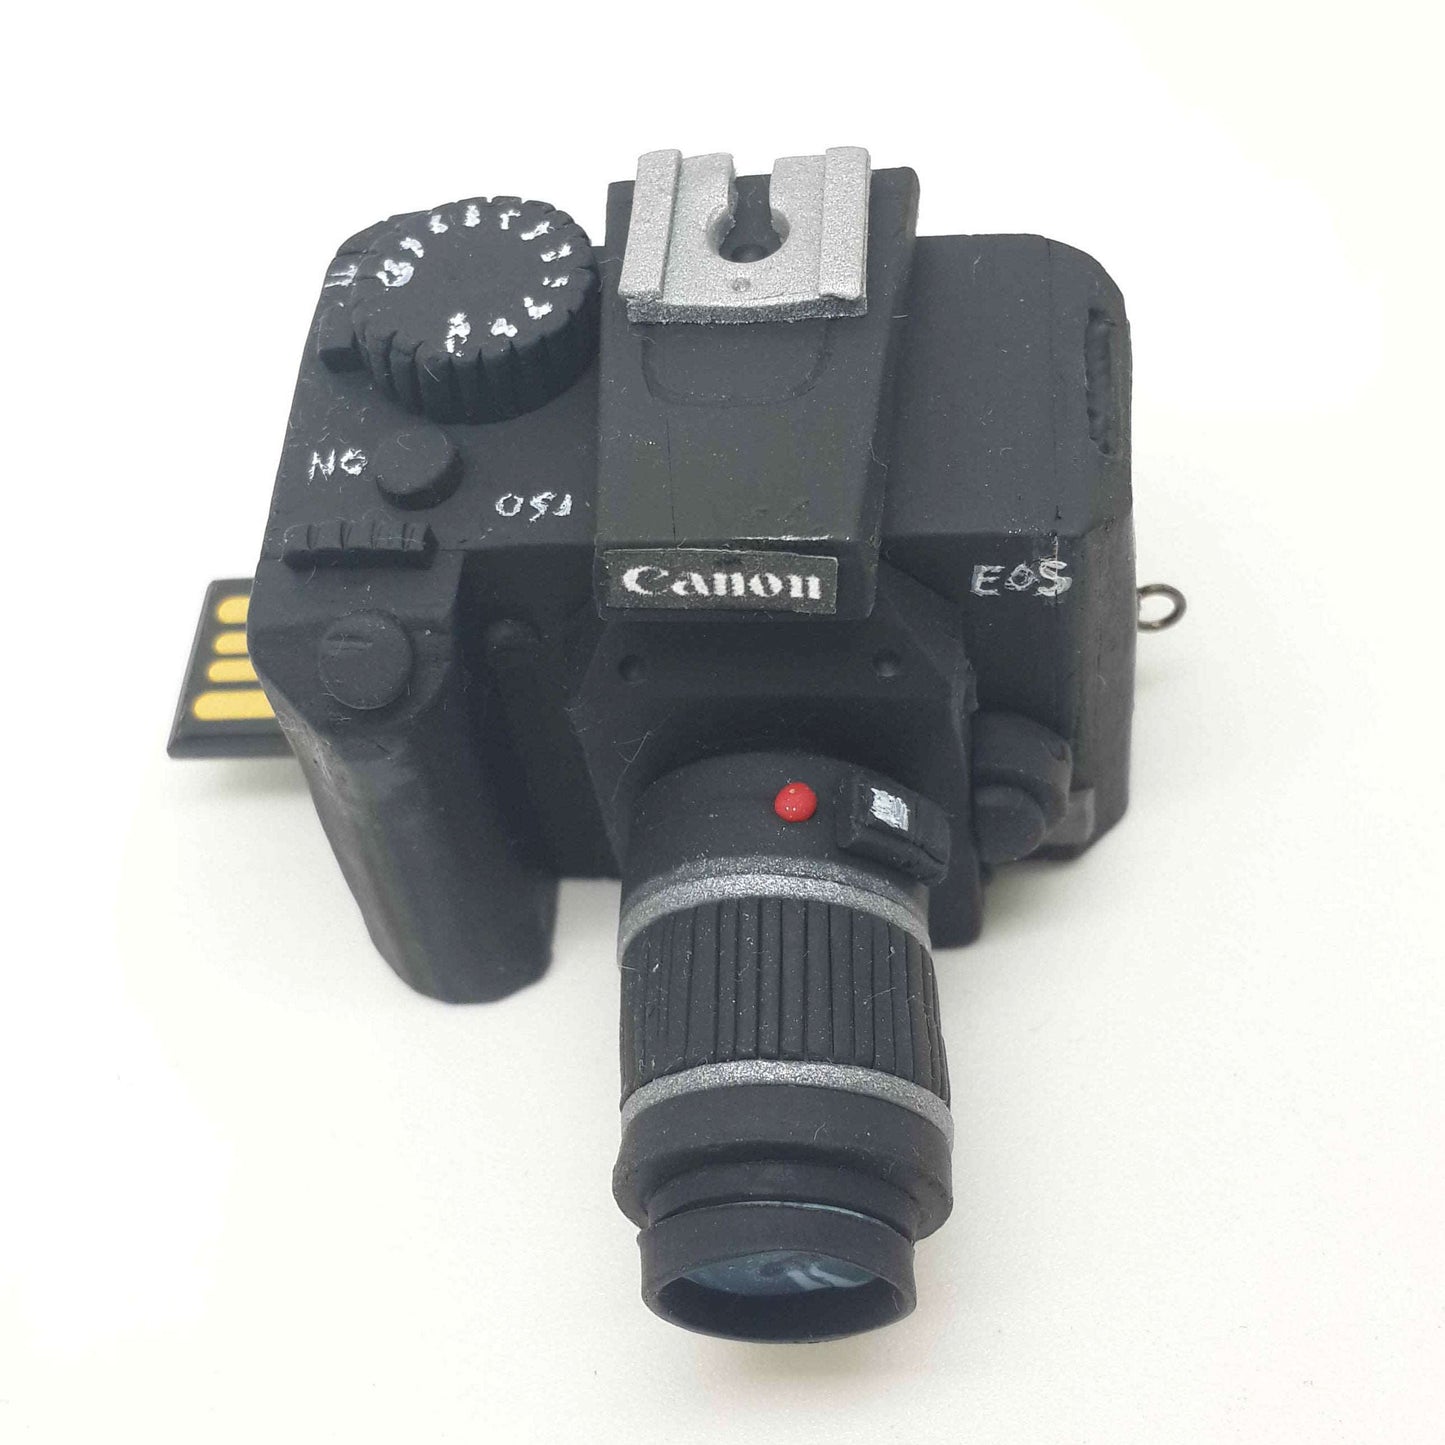 Canon Miniature DSLR Camera Novelty Pen Drive